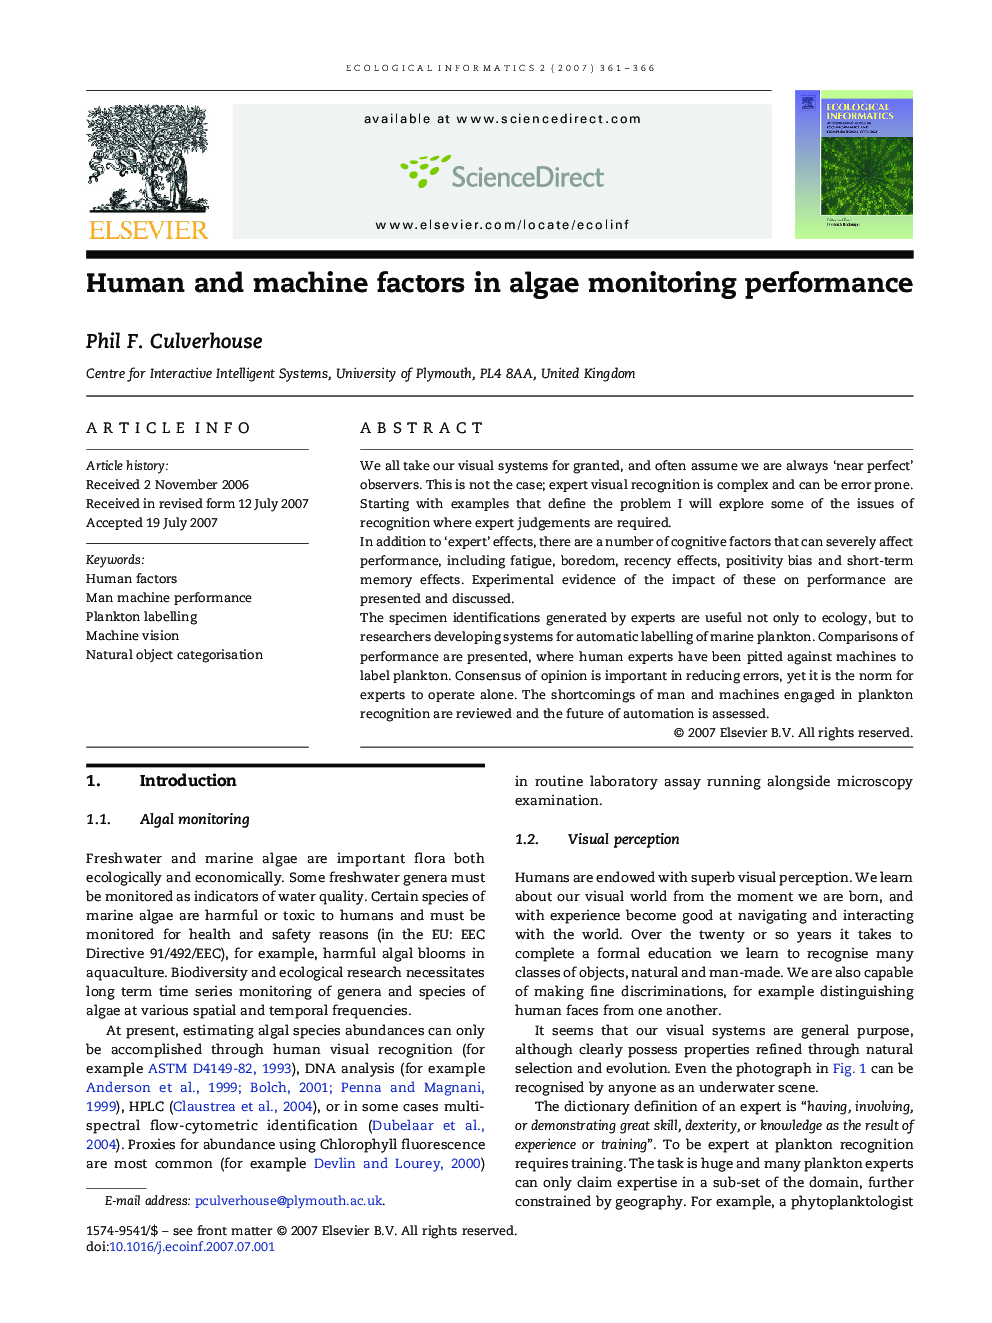 Human and machine factors in algae monitoring performance